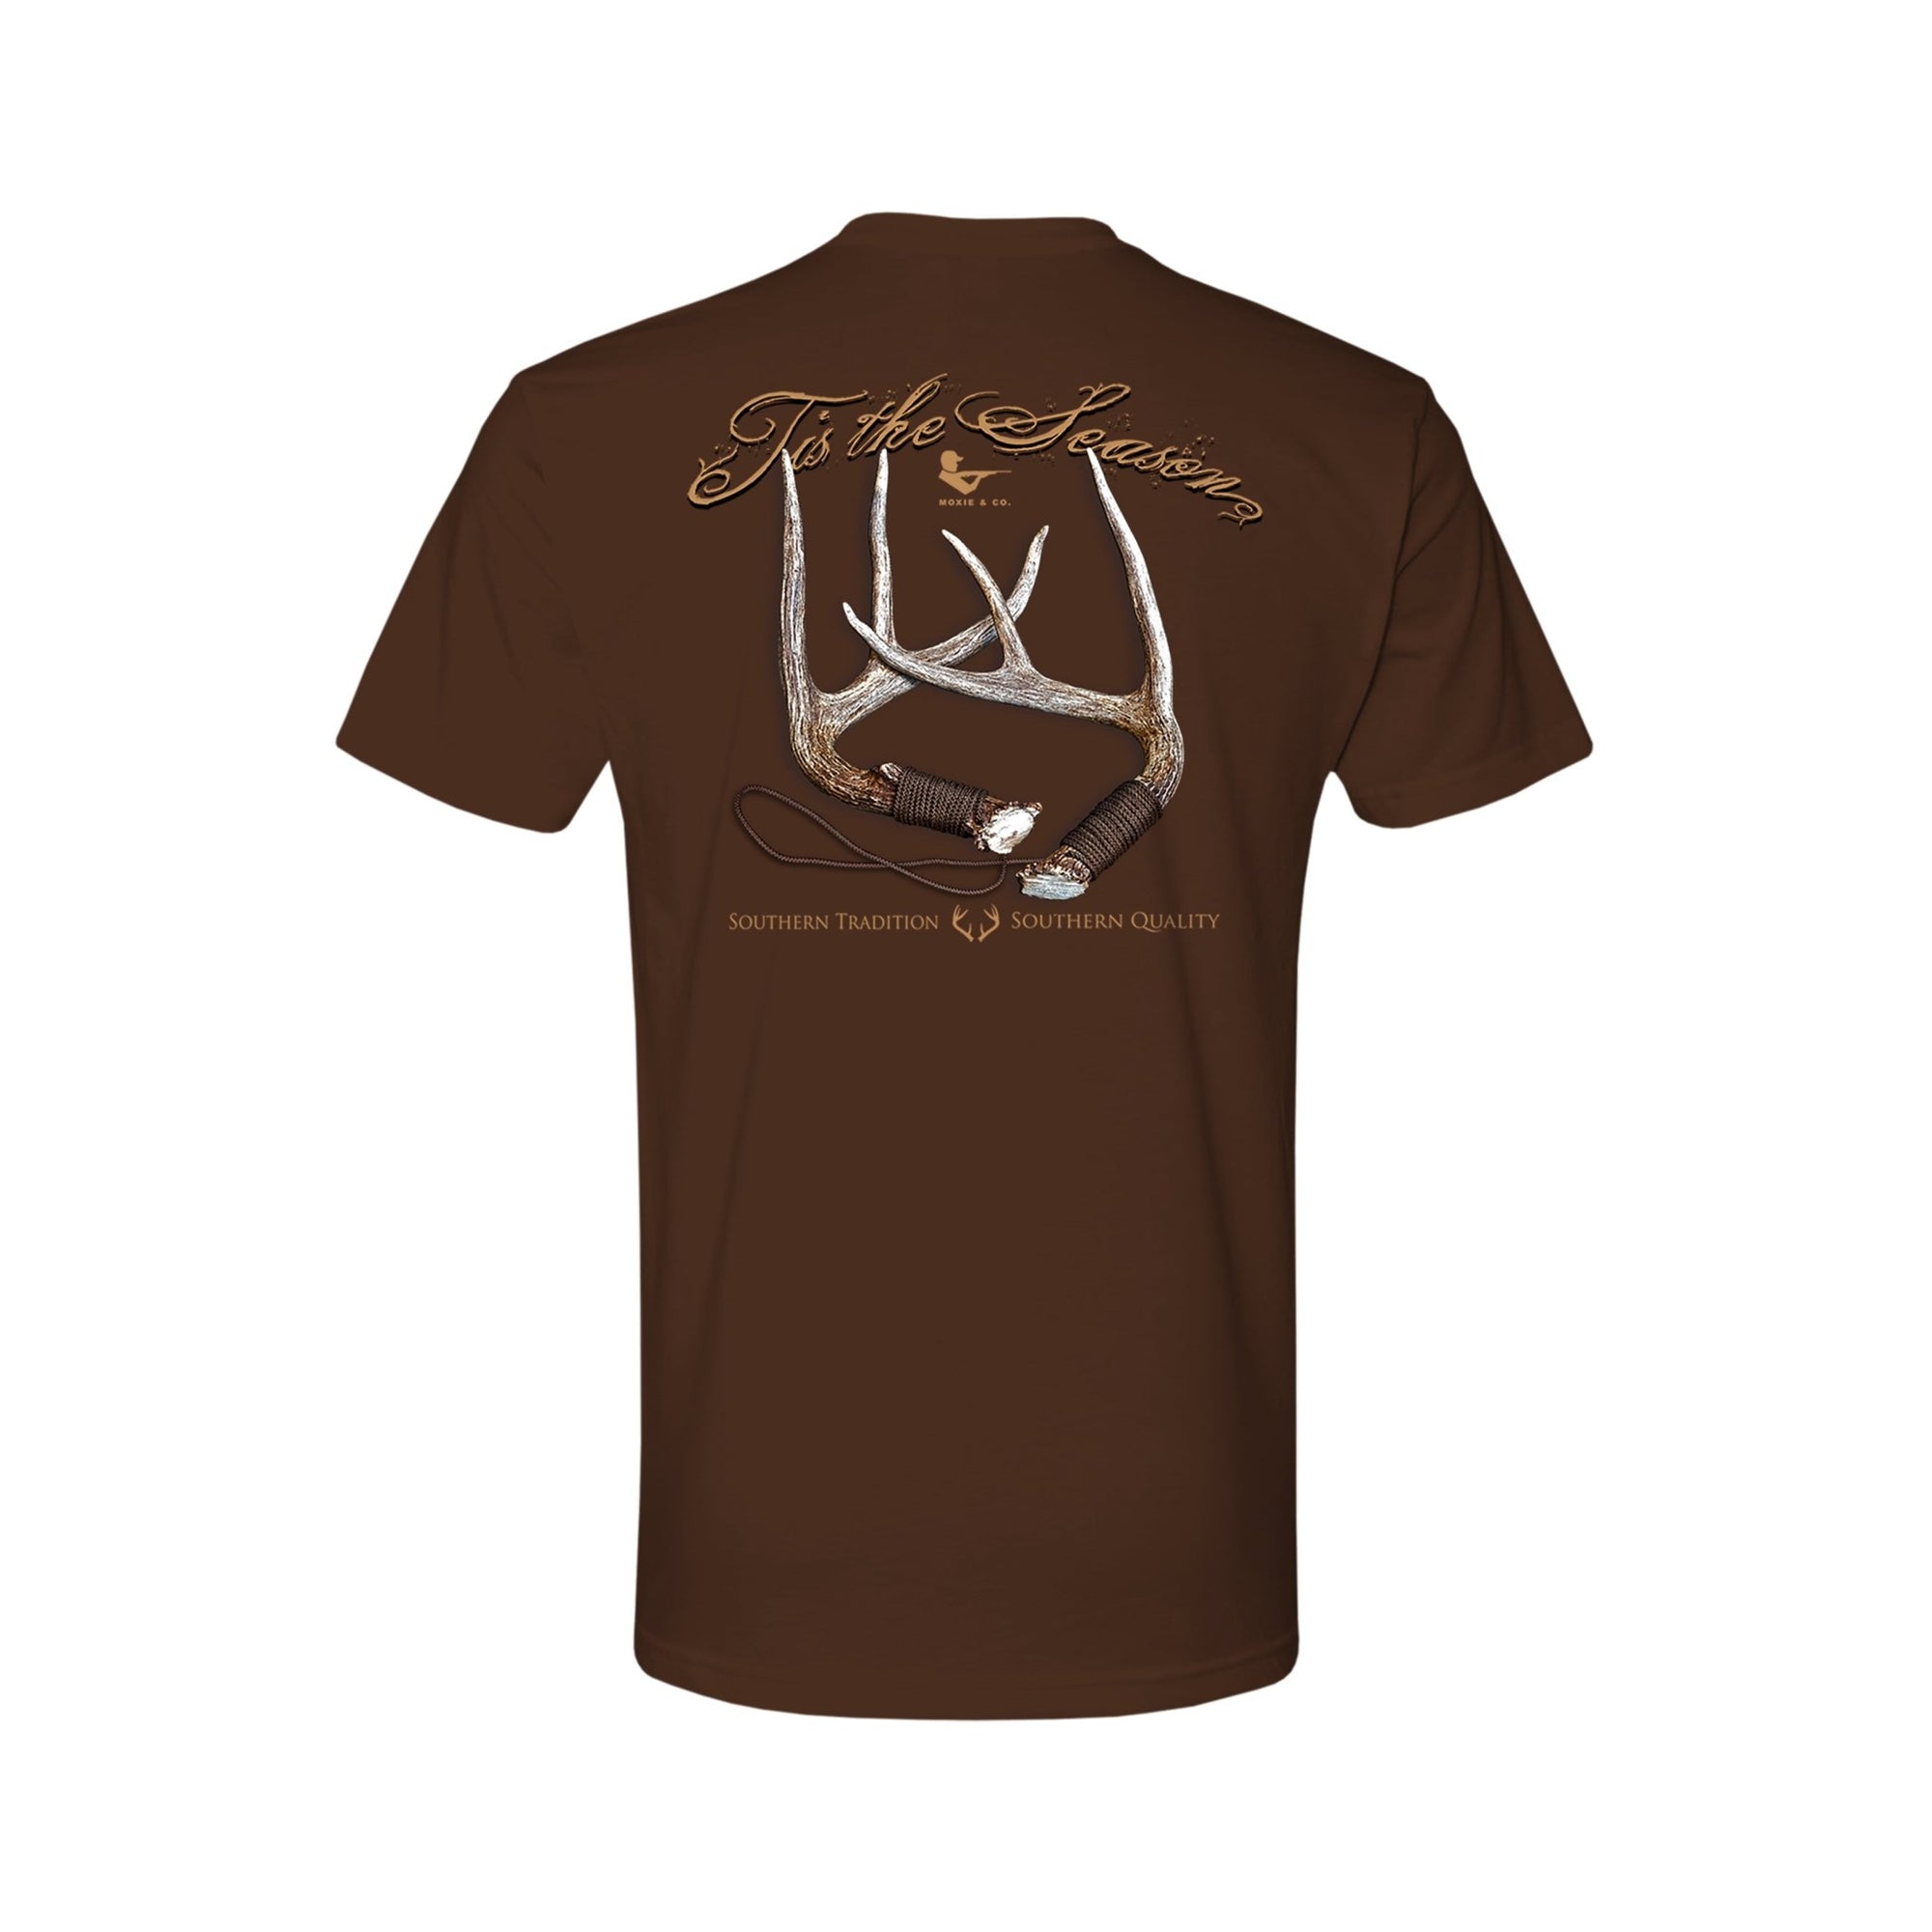 Tis The Season T-shirt - Black Cat MFG - T-Shirt